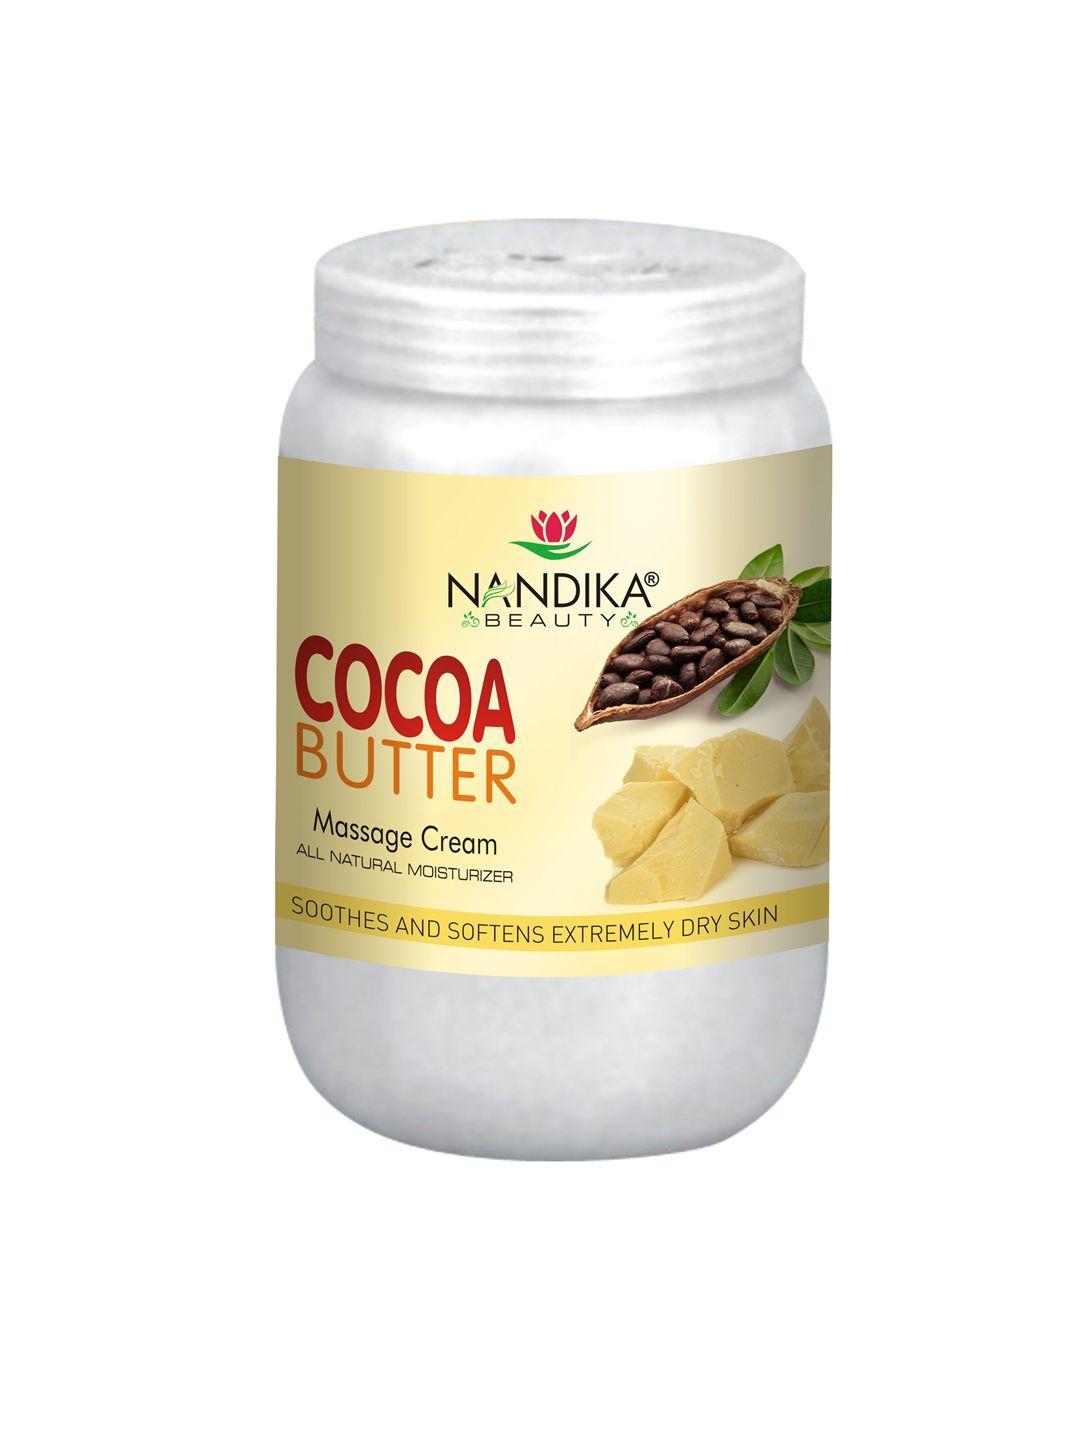 nandika beauty cocoa butter massage cream - 800g